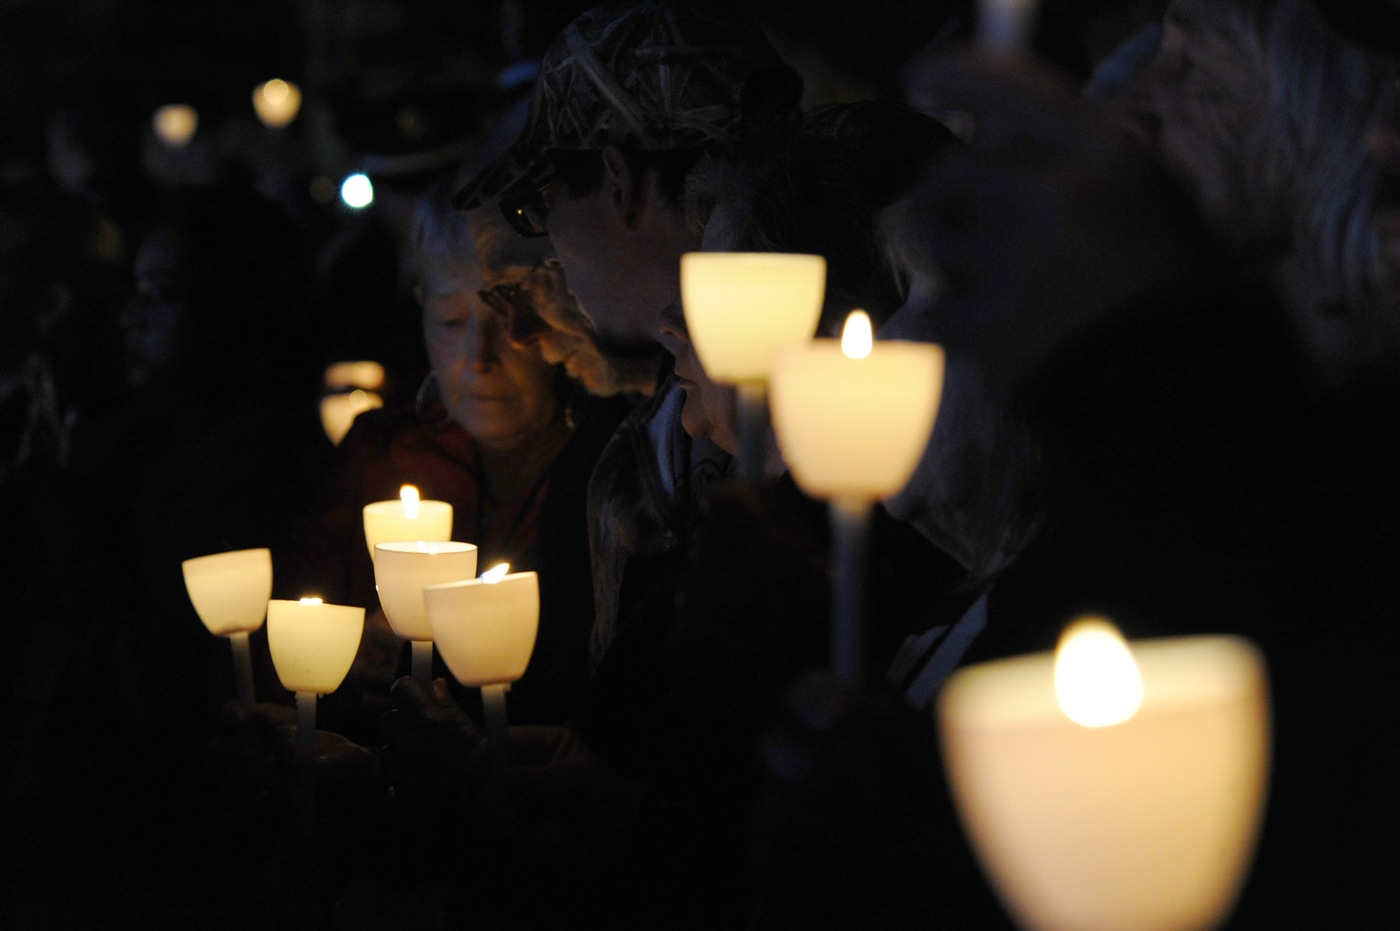 National Police Week 2019: Candlelight Vigil